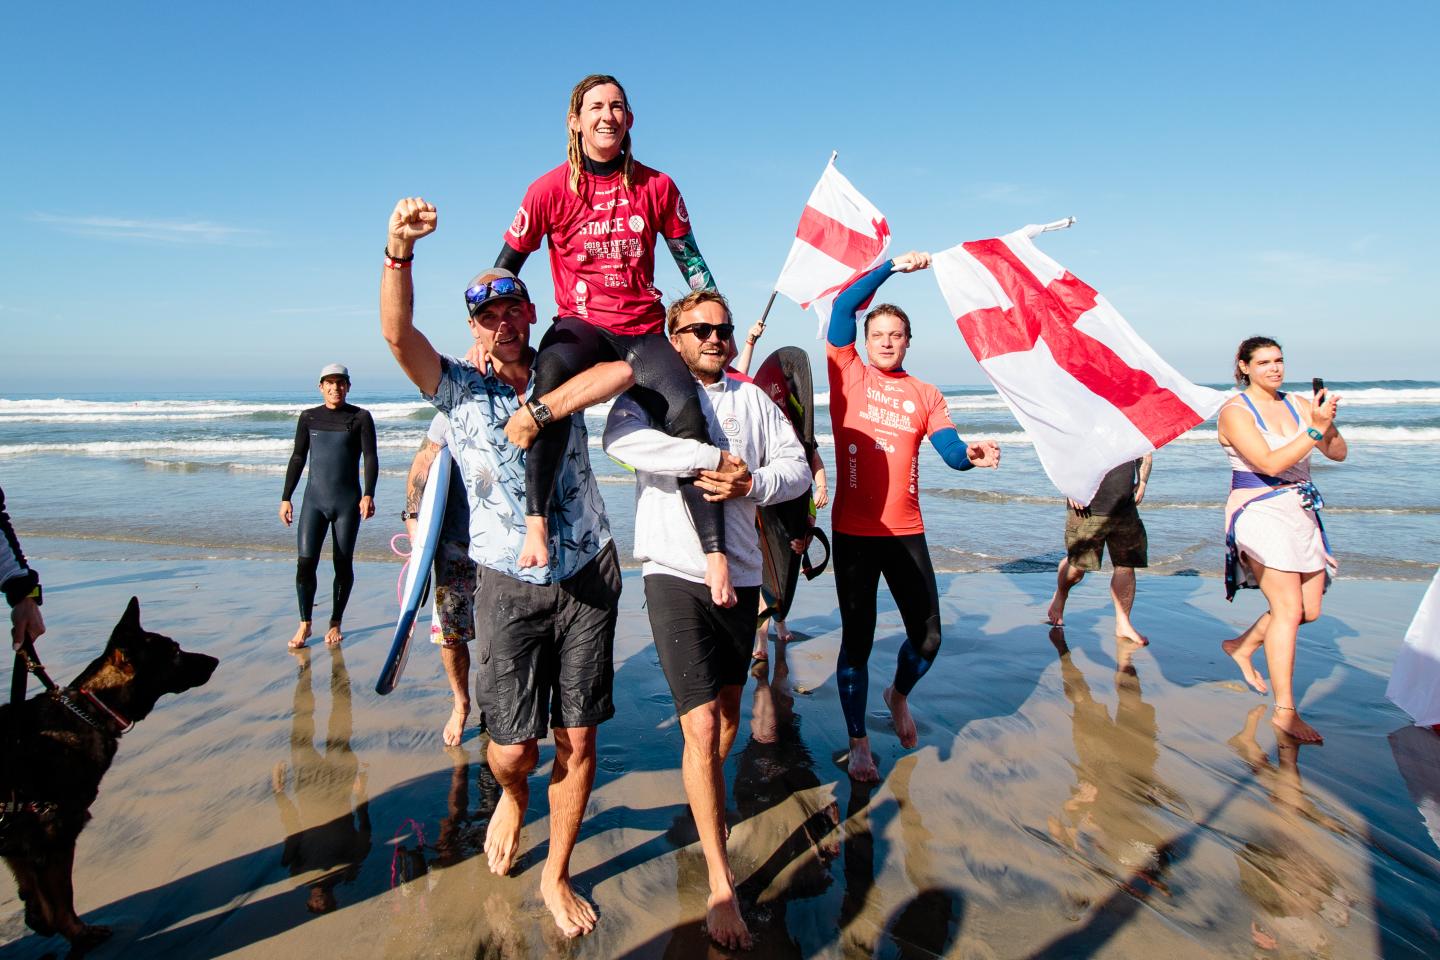 Melissa Reid being held aloft by surfers after winning ISA World Para Surfing Championship